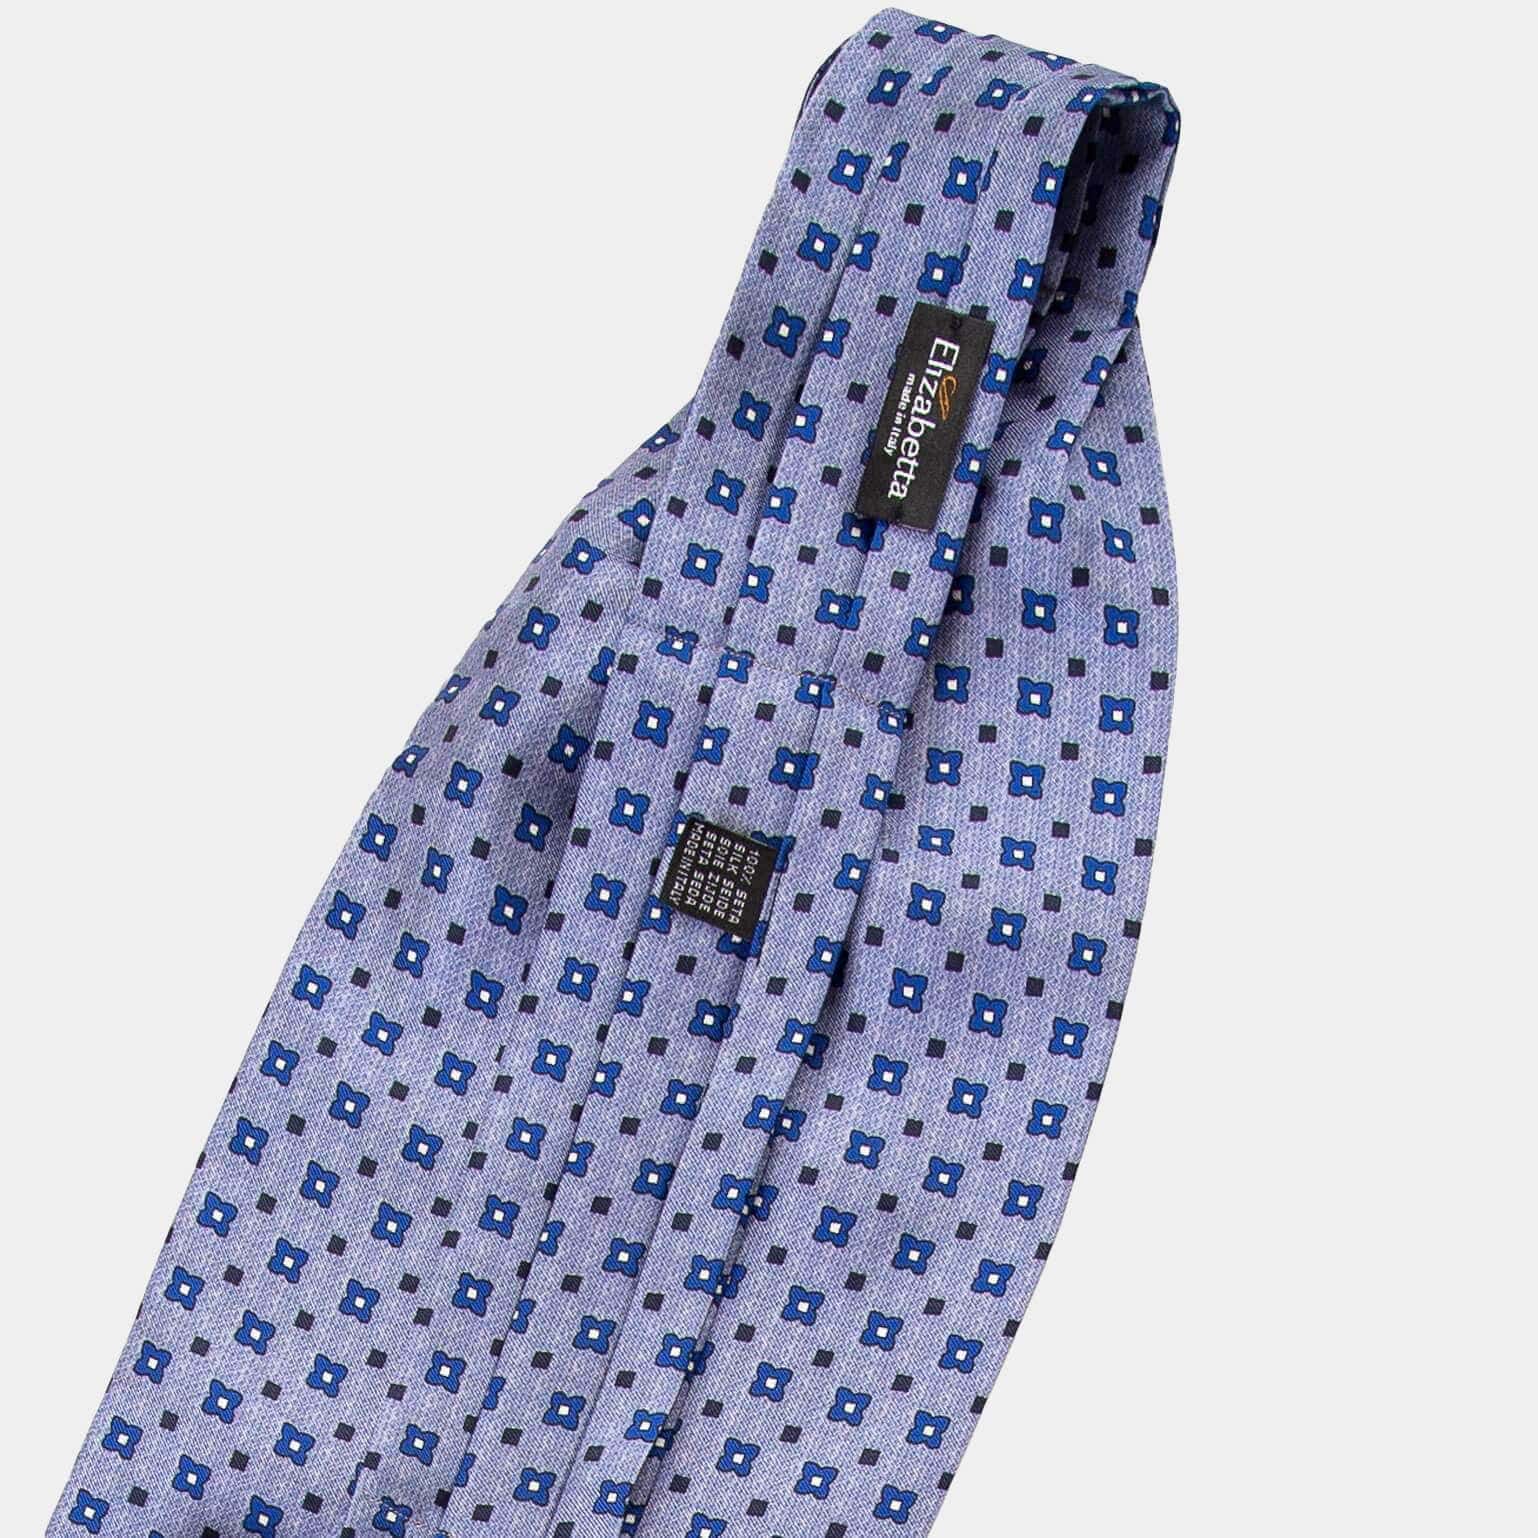 LOUIS VUITTON Plum-colored silk tie In its box